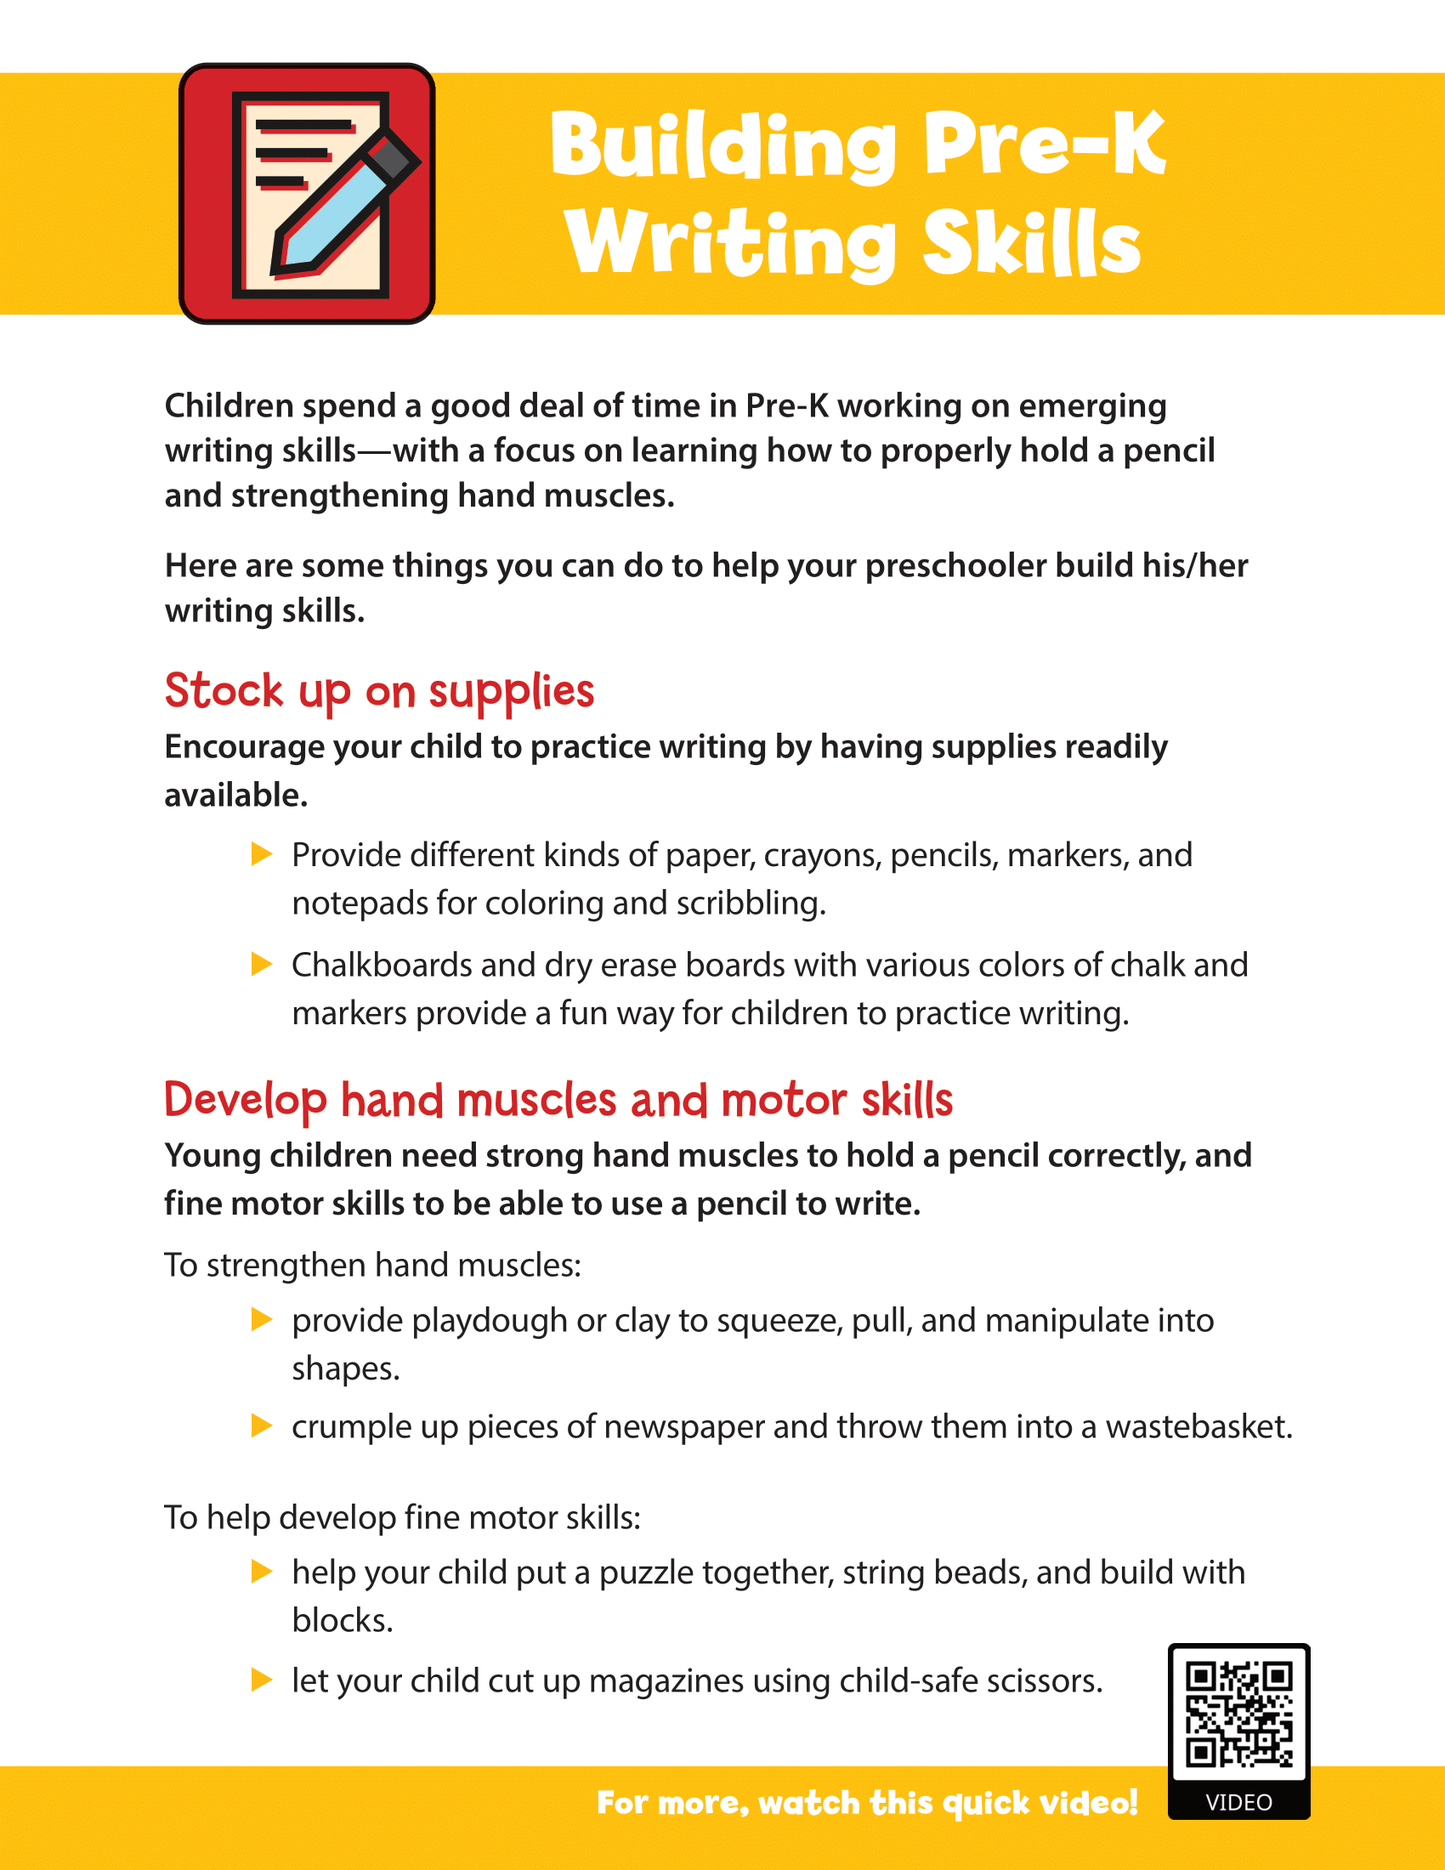 Building Pre-K Writing Skills